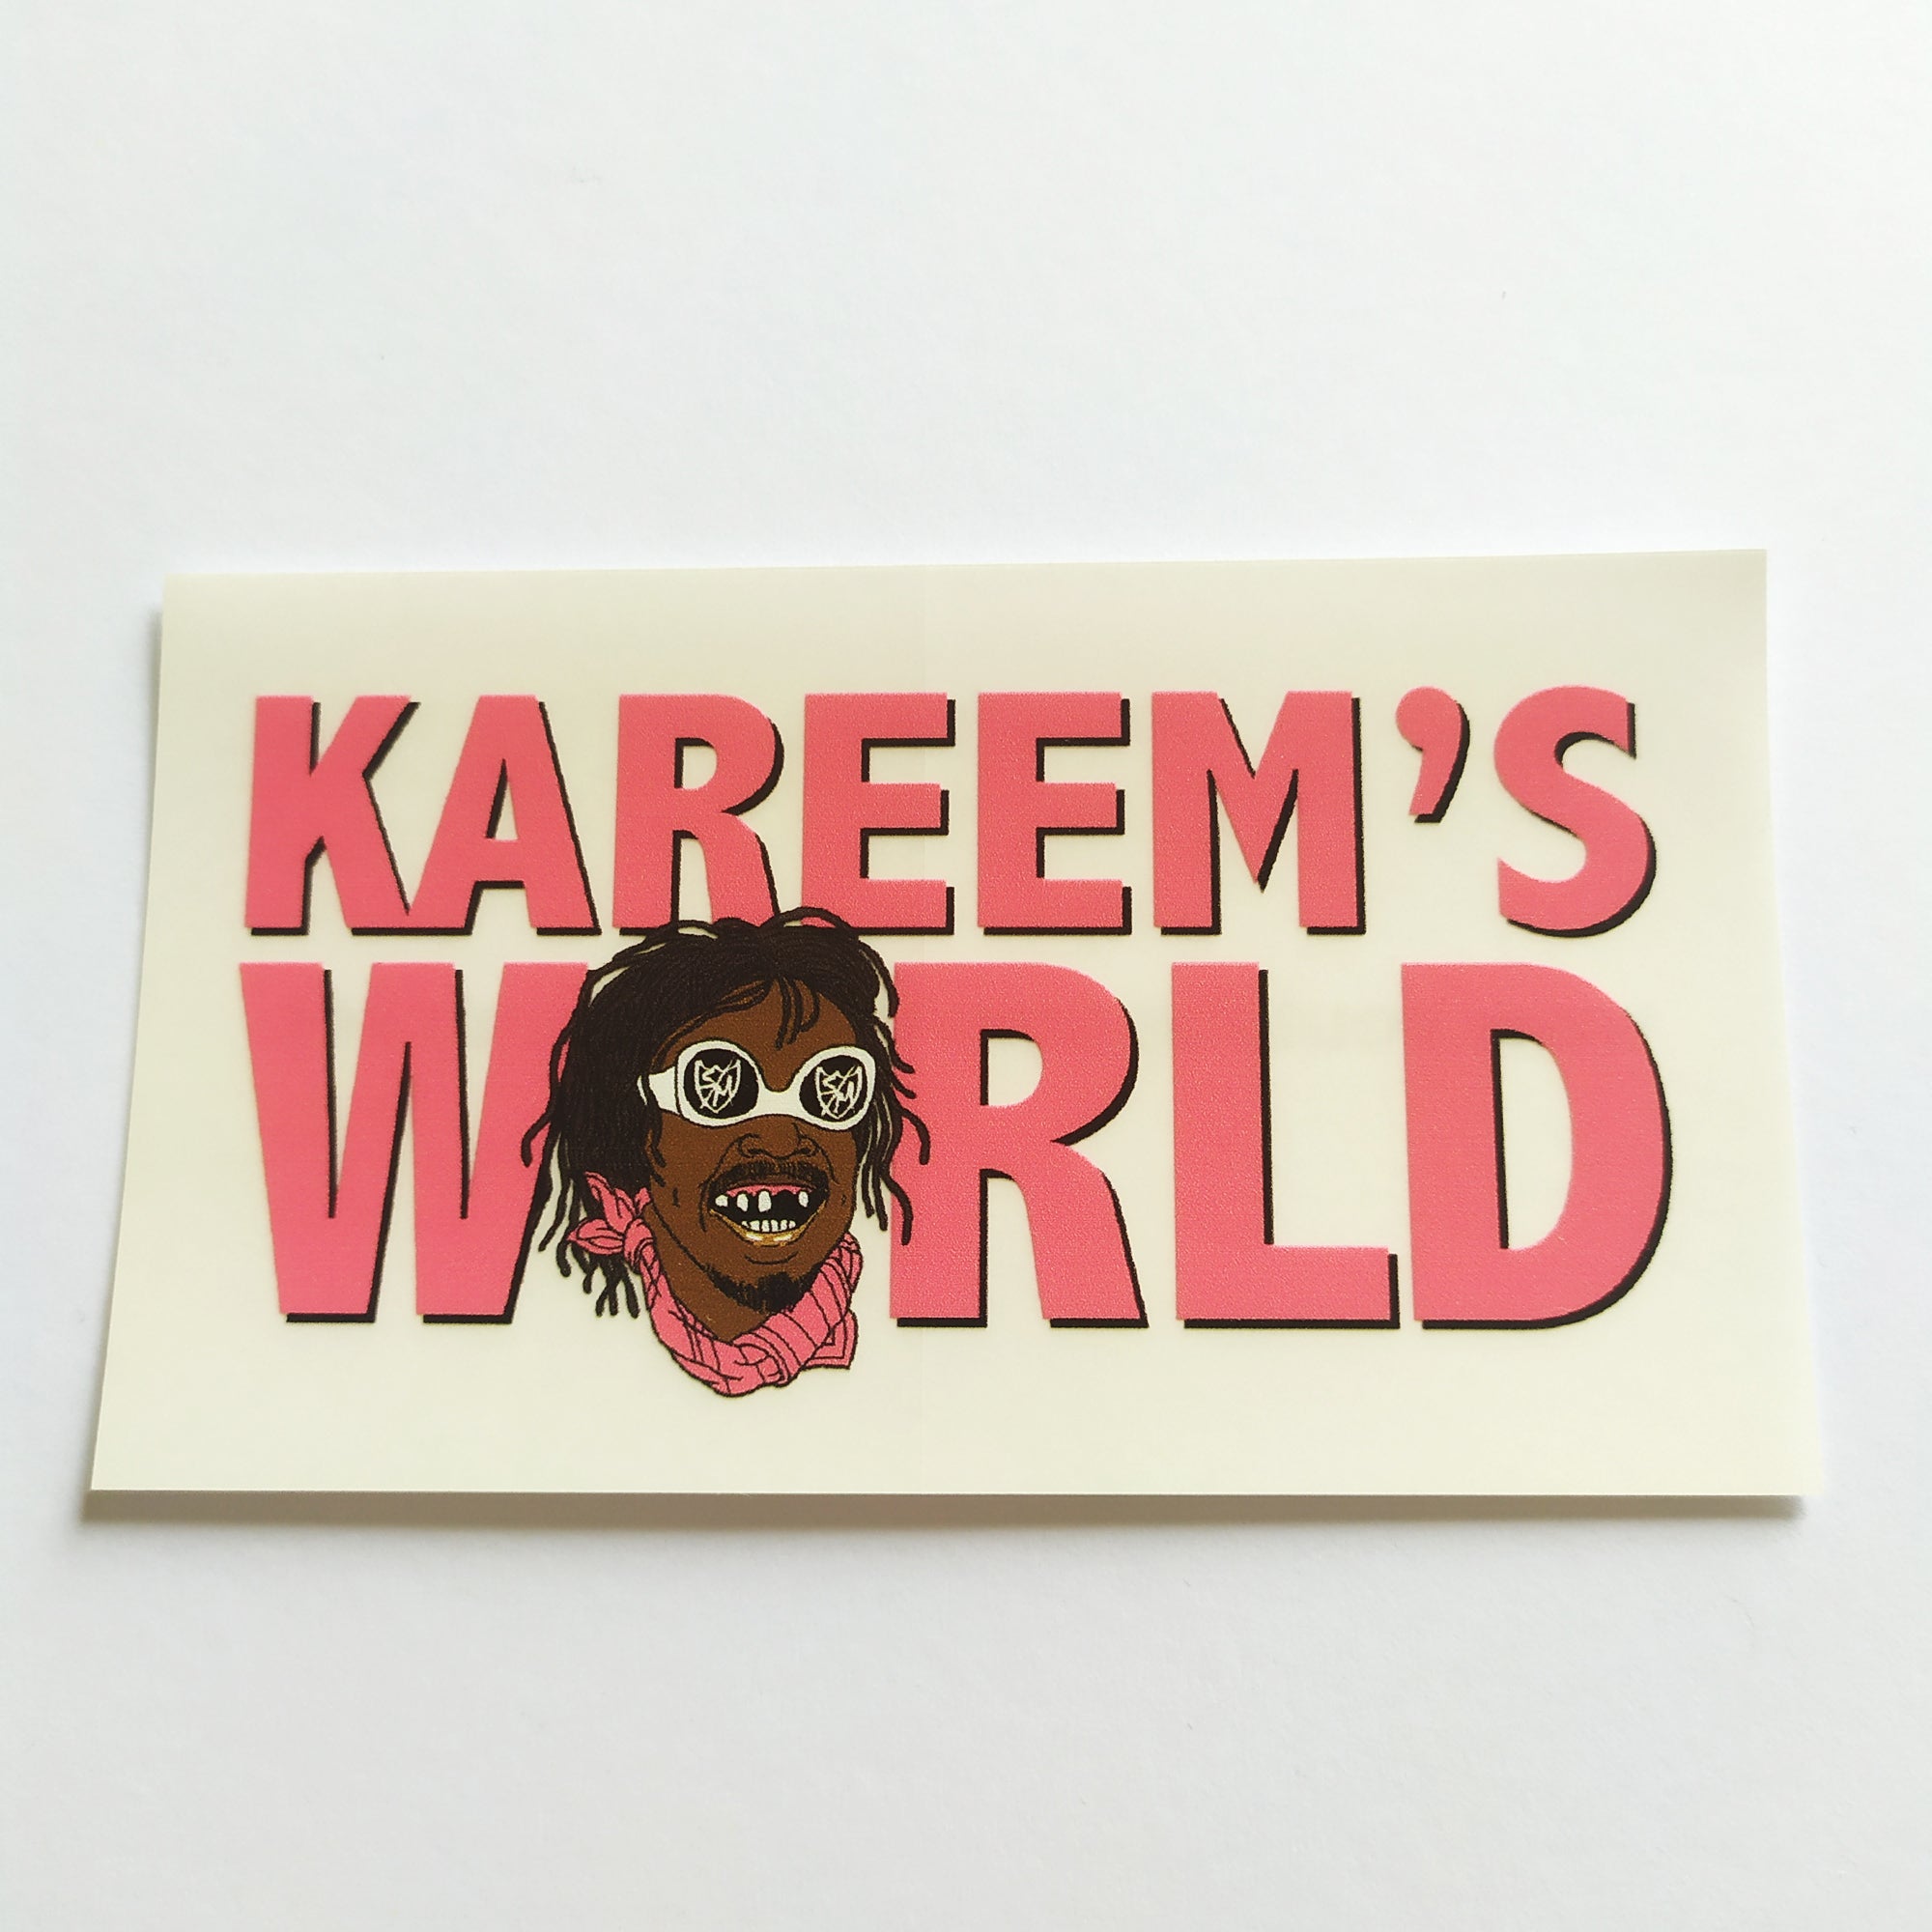 S&M "Kareem's World" BMX Sticker - SkateboardStickers.com